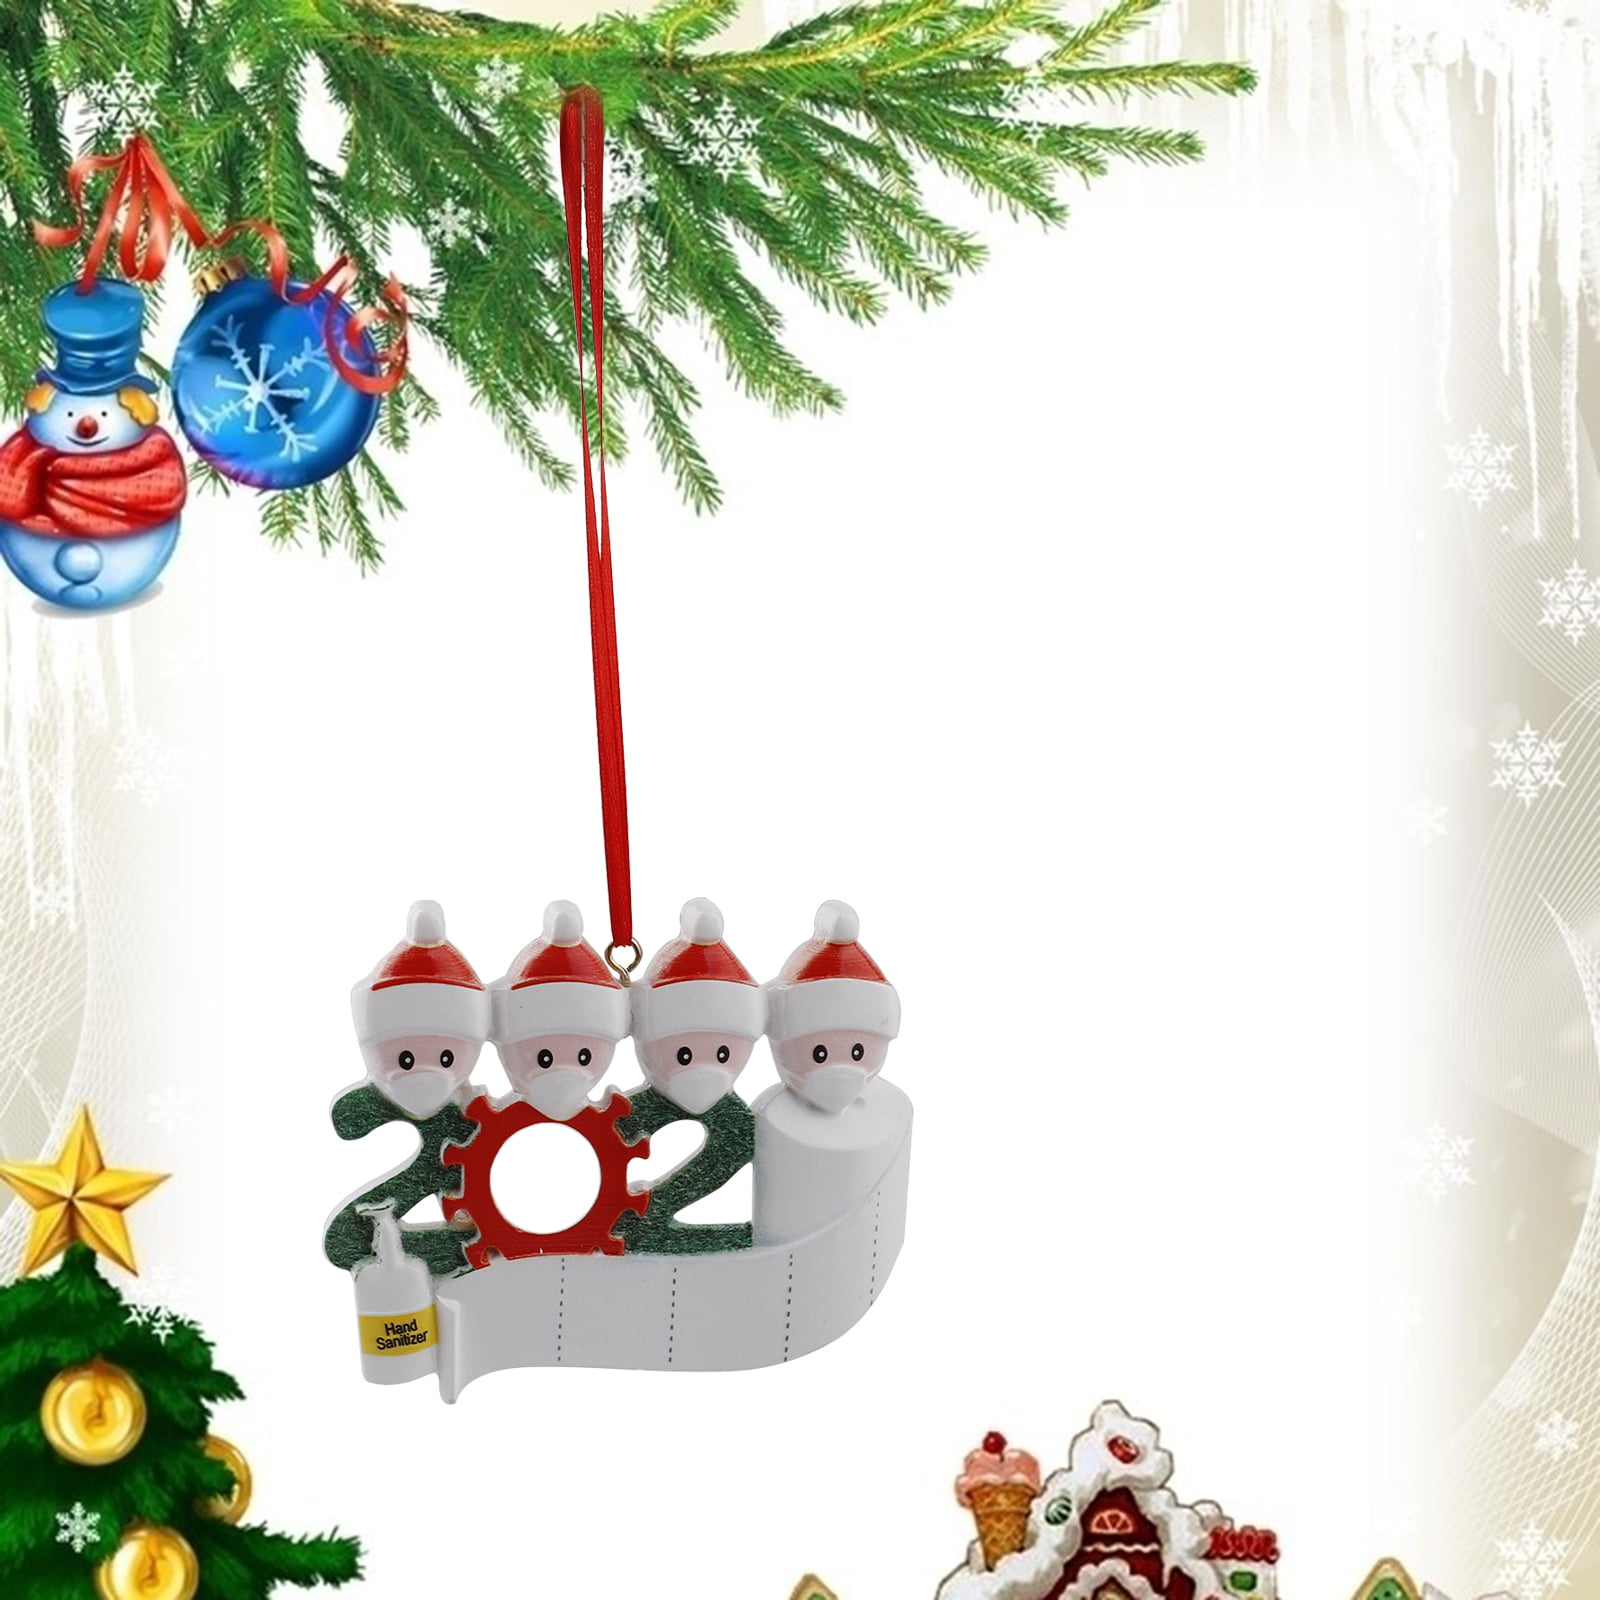 10 White Snowflake Hanging Ornament Xmas Christmas Party Hanging Decor 7.5cm 